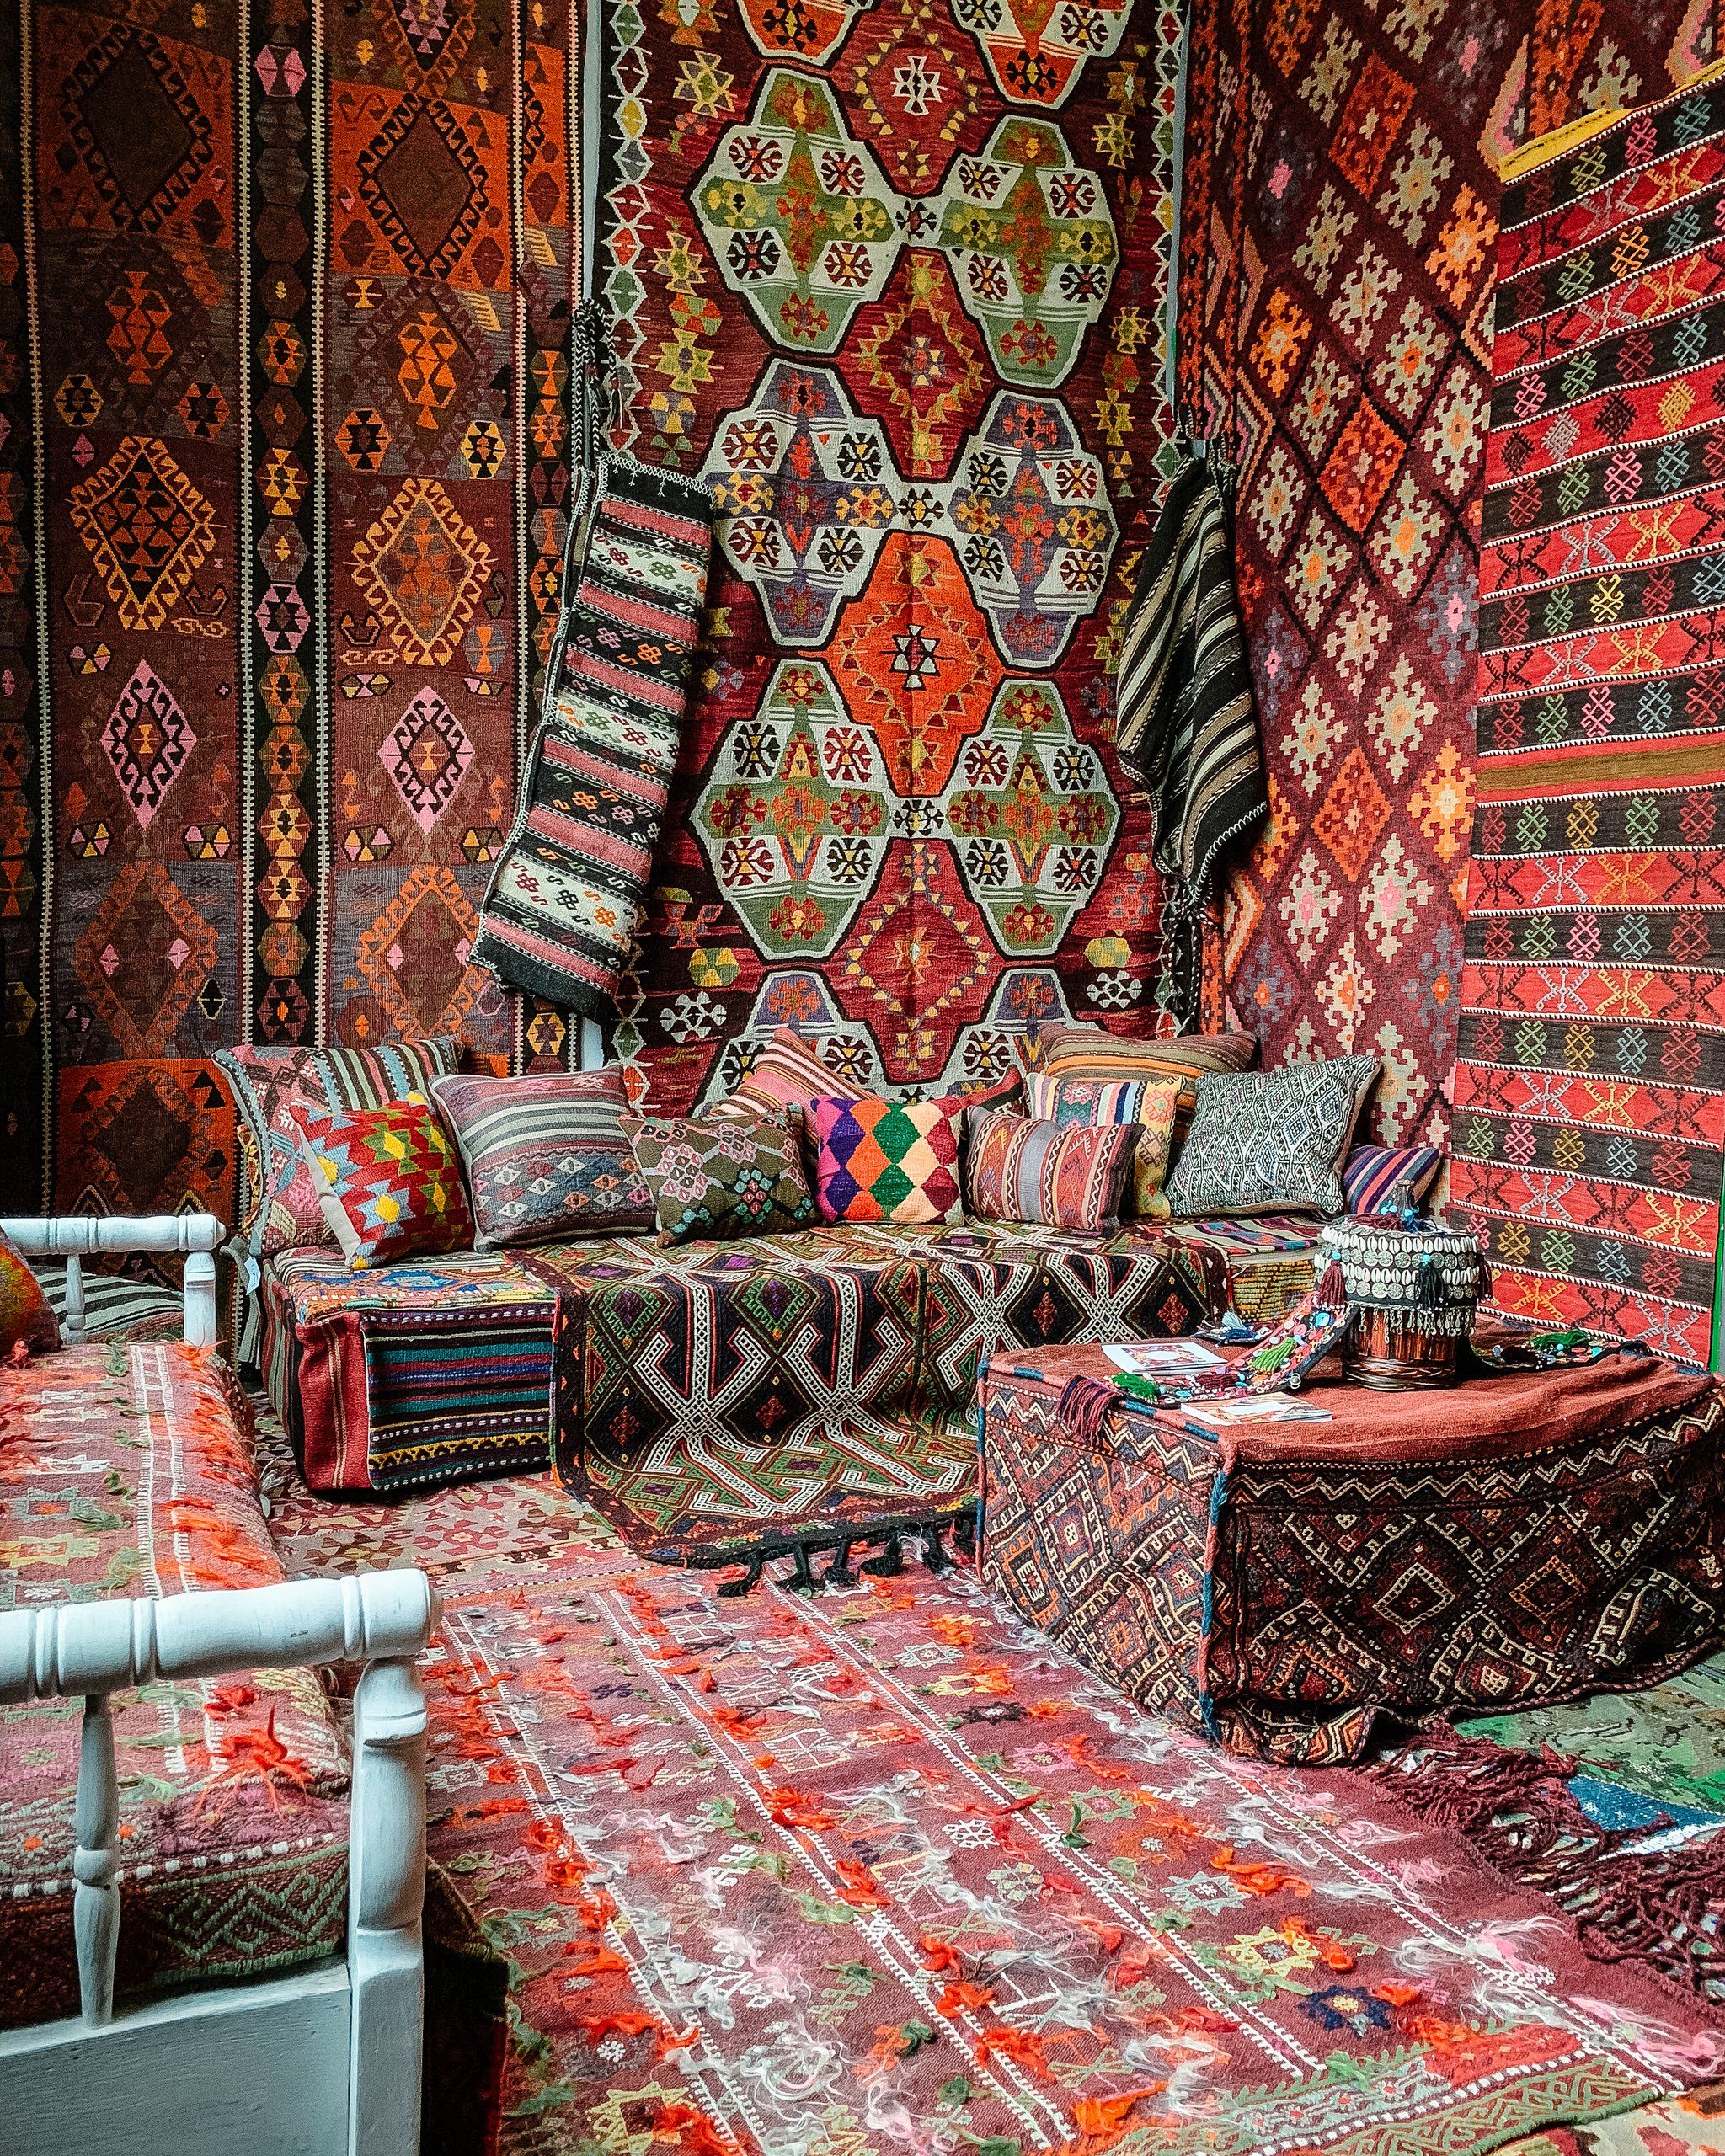 Considering turkish rugs